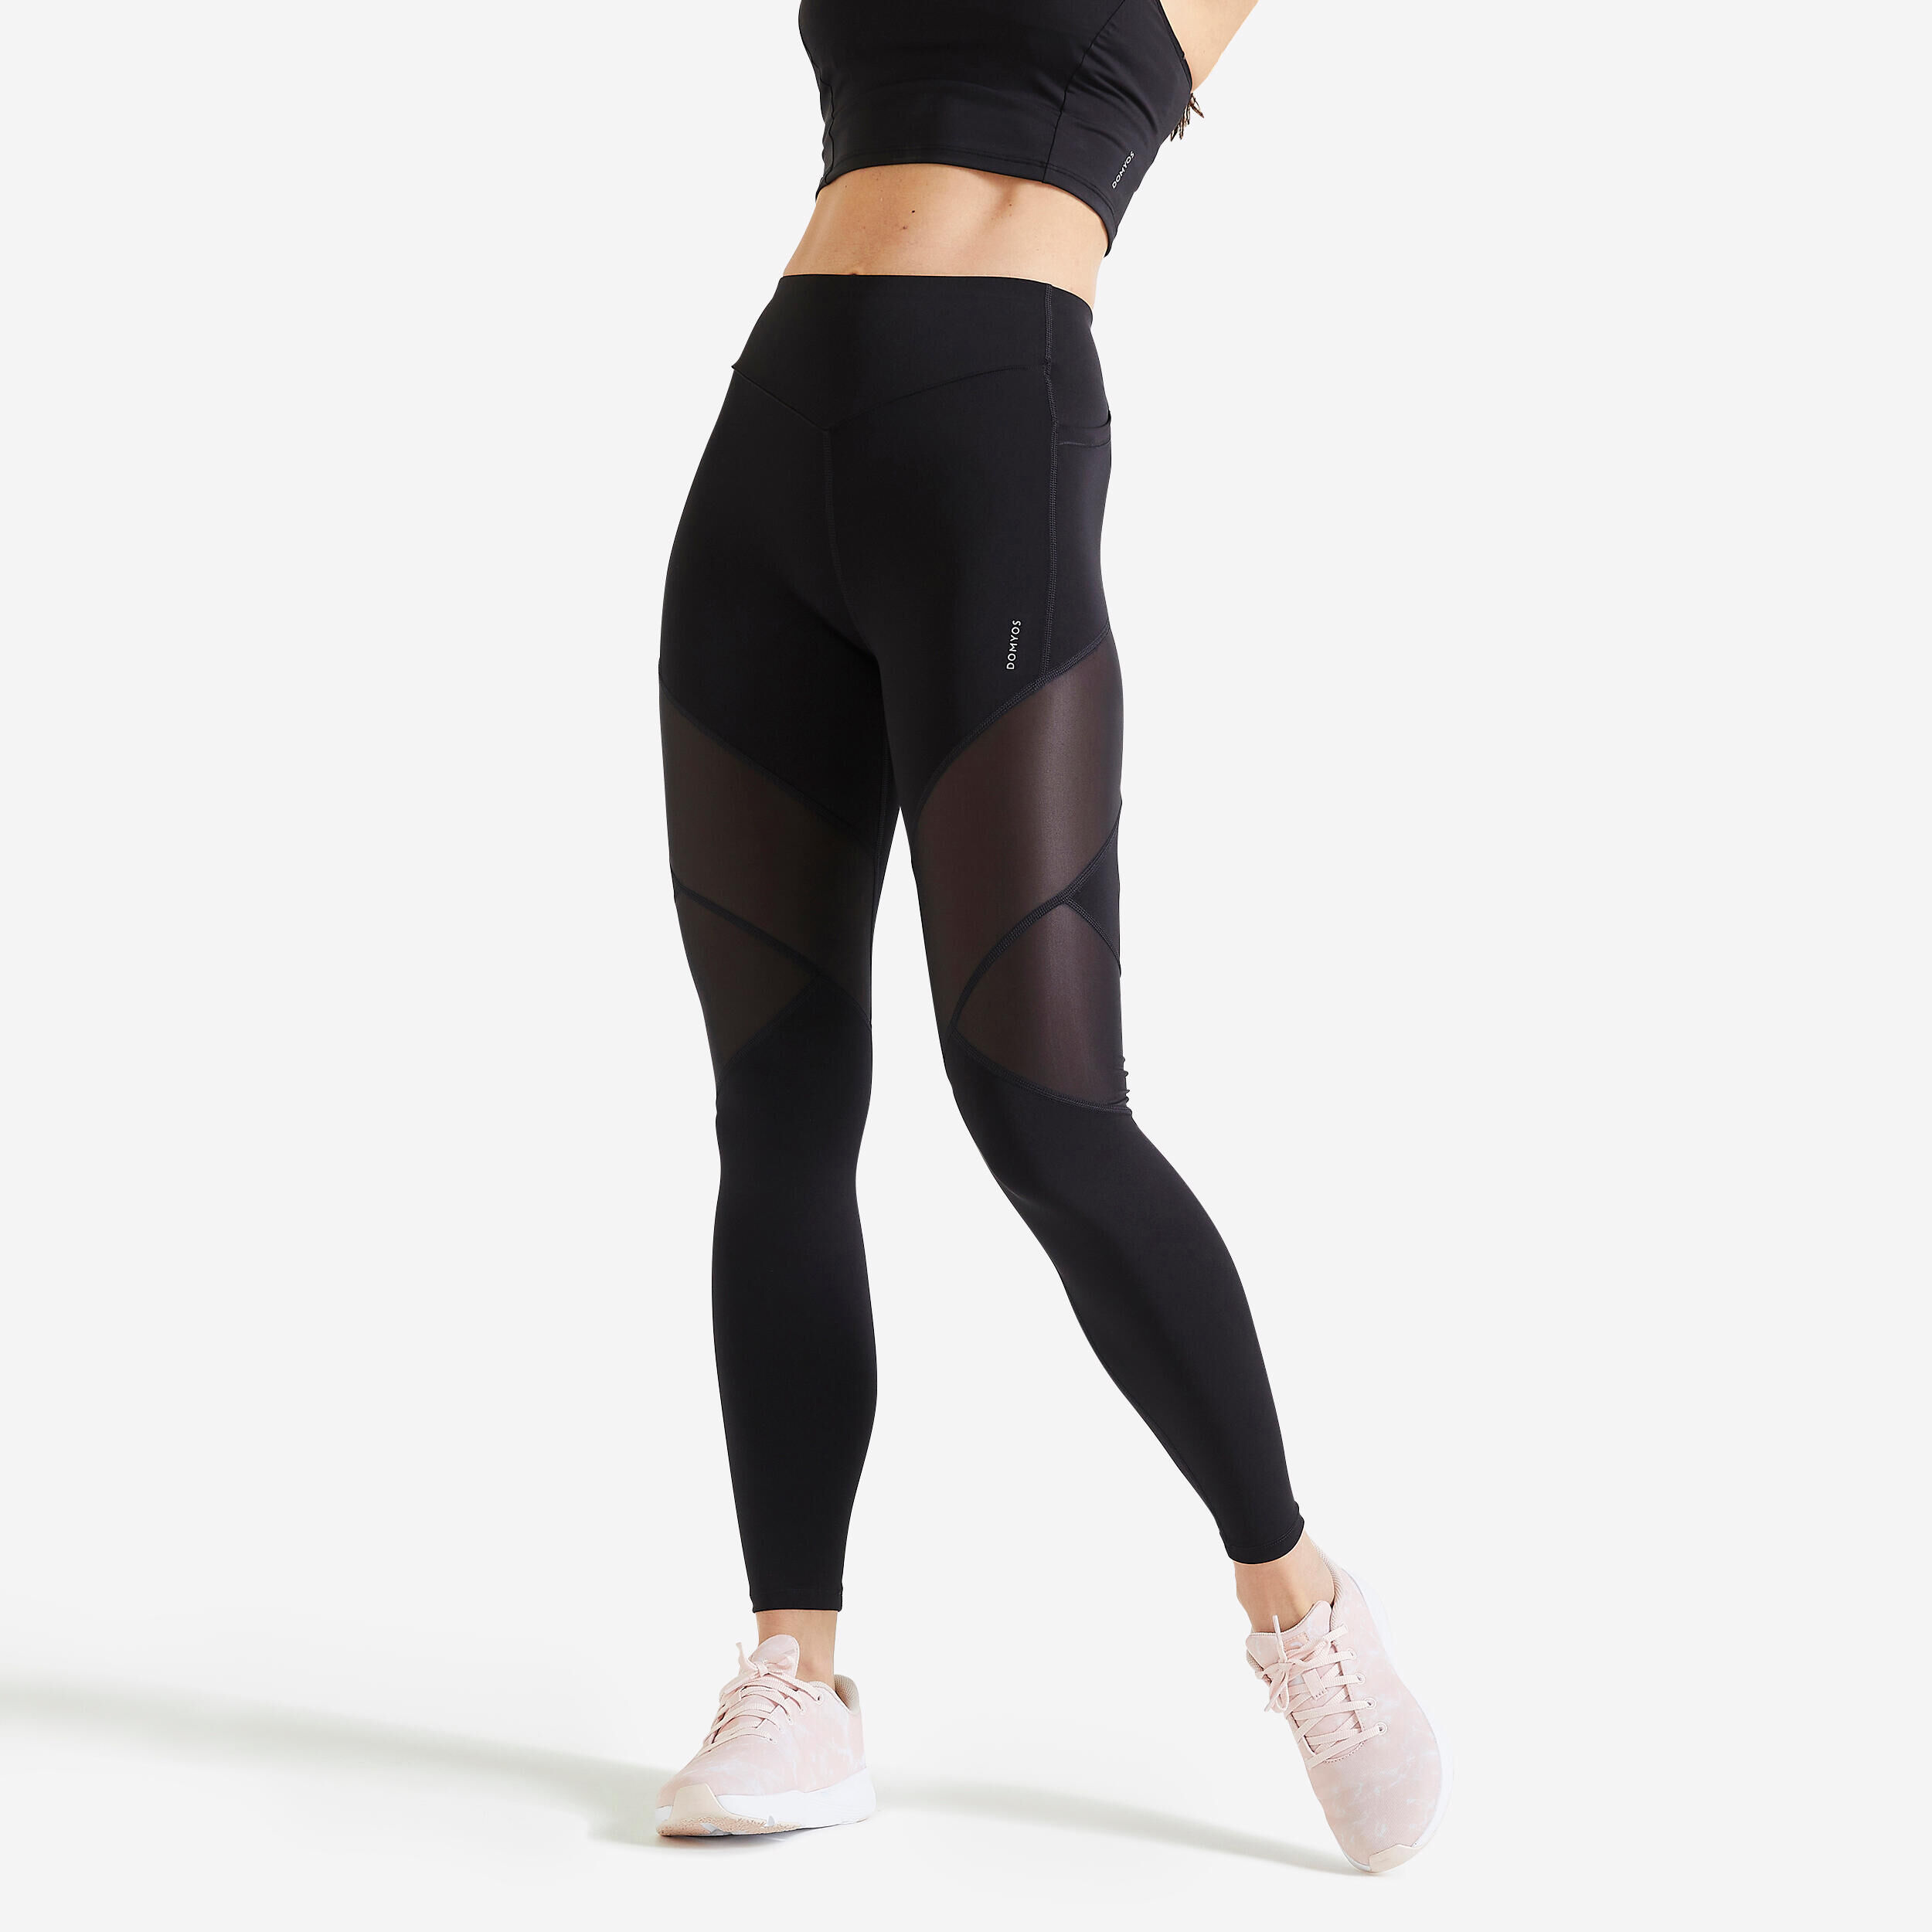 DOMYOS Women's Cardio Fitness High-Waisted Bimaterial Leggings - Black